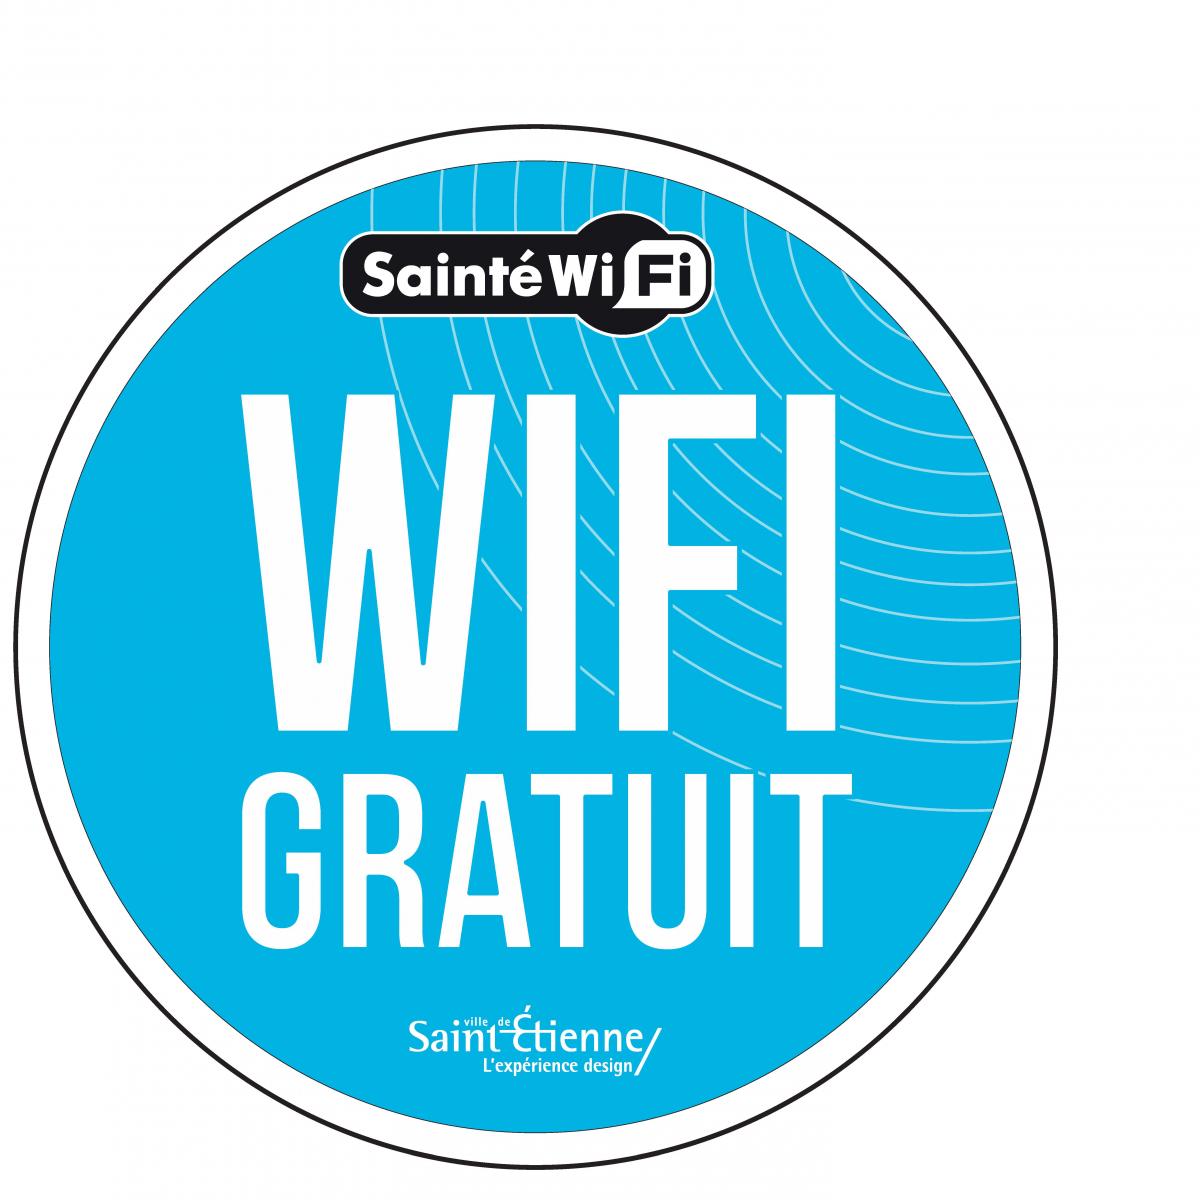 Sainté Wifi gratuit